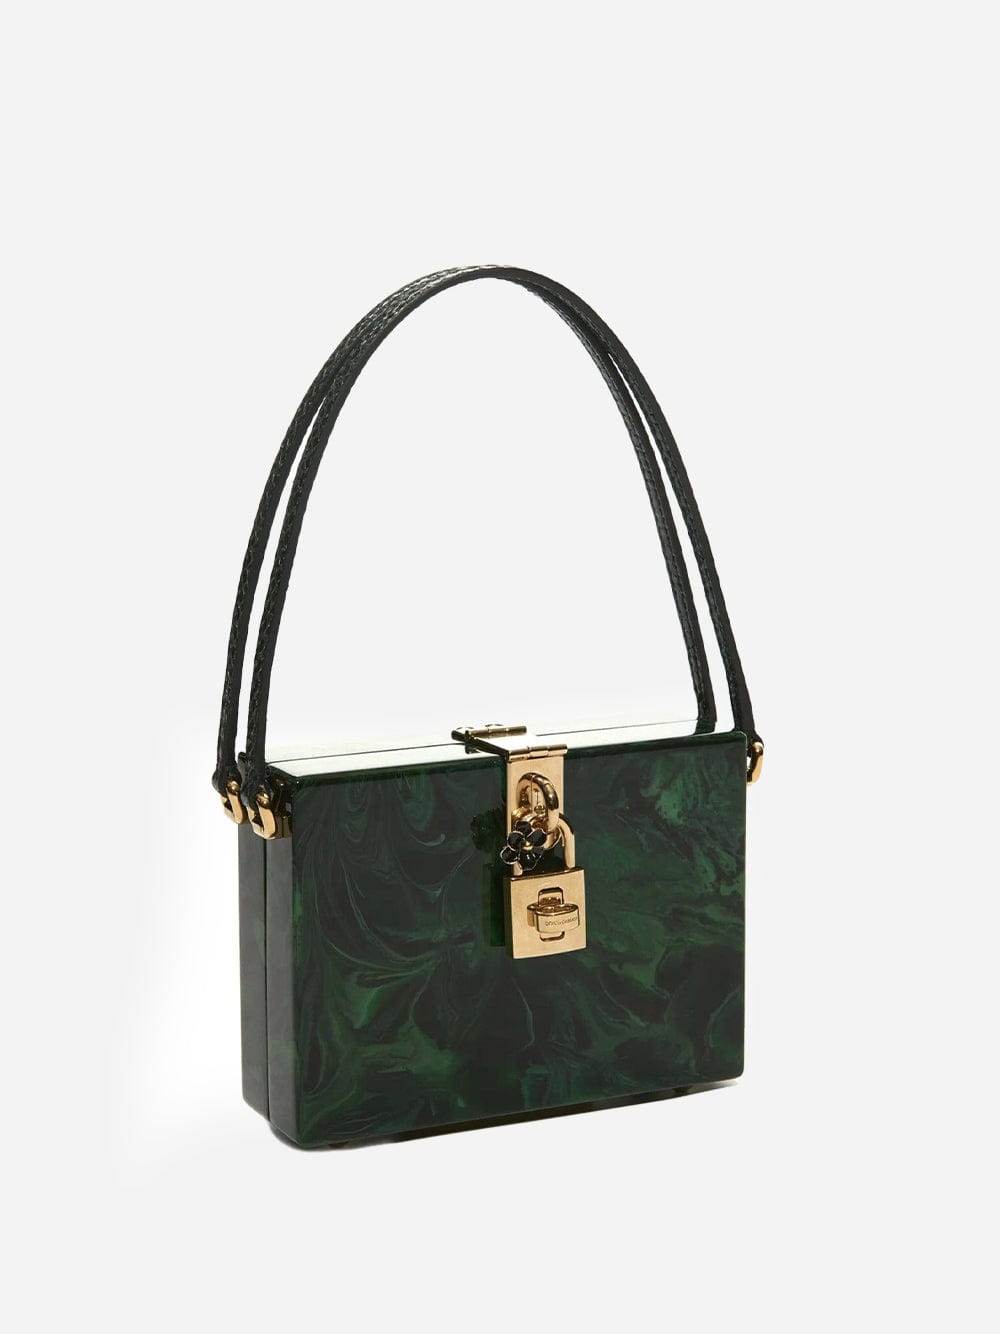 Dolce & Gabbana Marble-Effect Plexi Clutch Bag